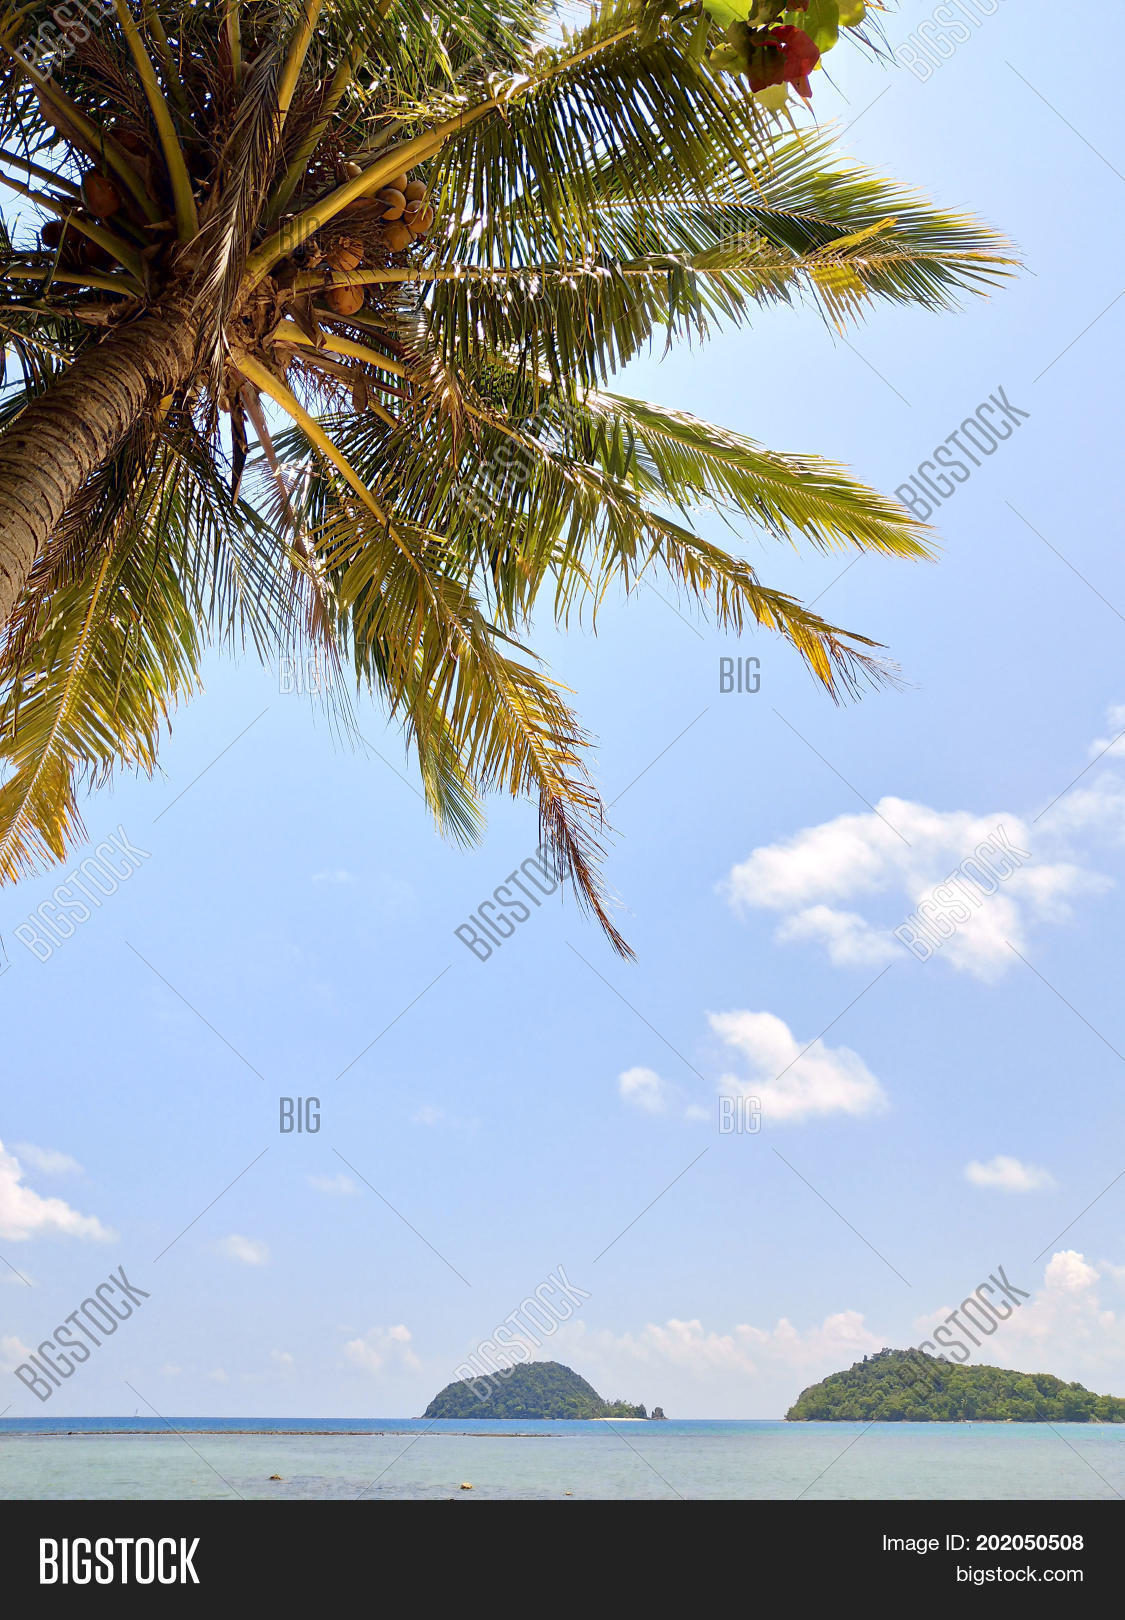 Coconut Trees Fruitful Image Photo Trial Bigstock